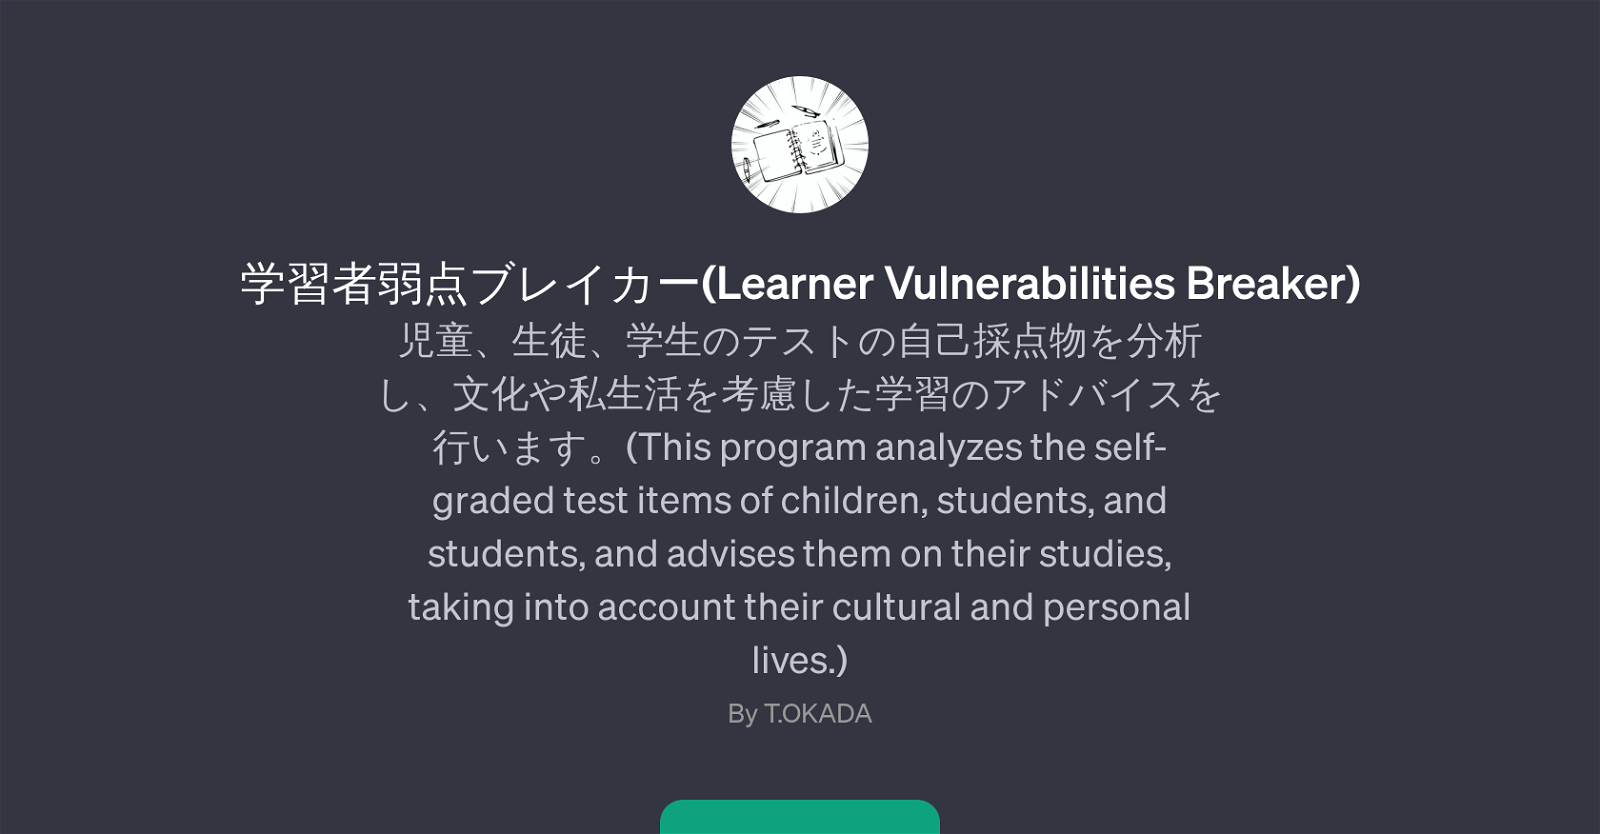 (Learner Vulnerabilities Breaker) website